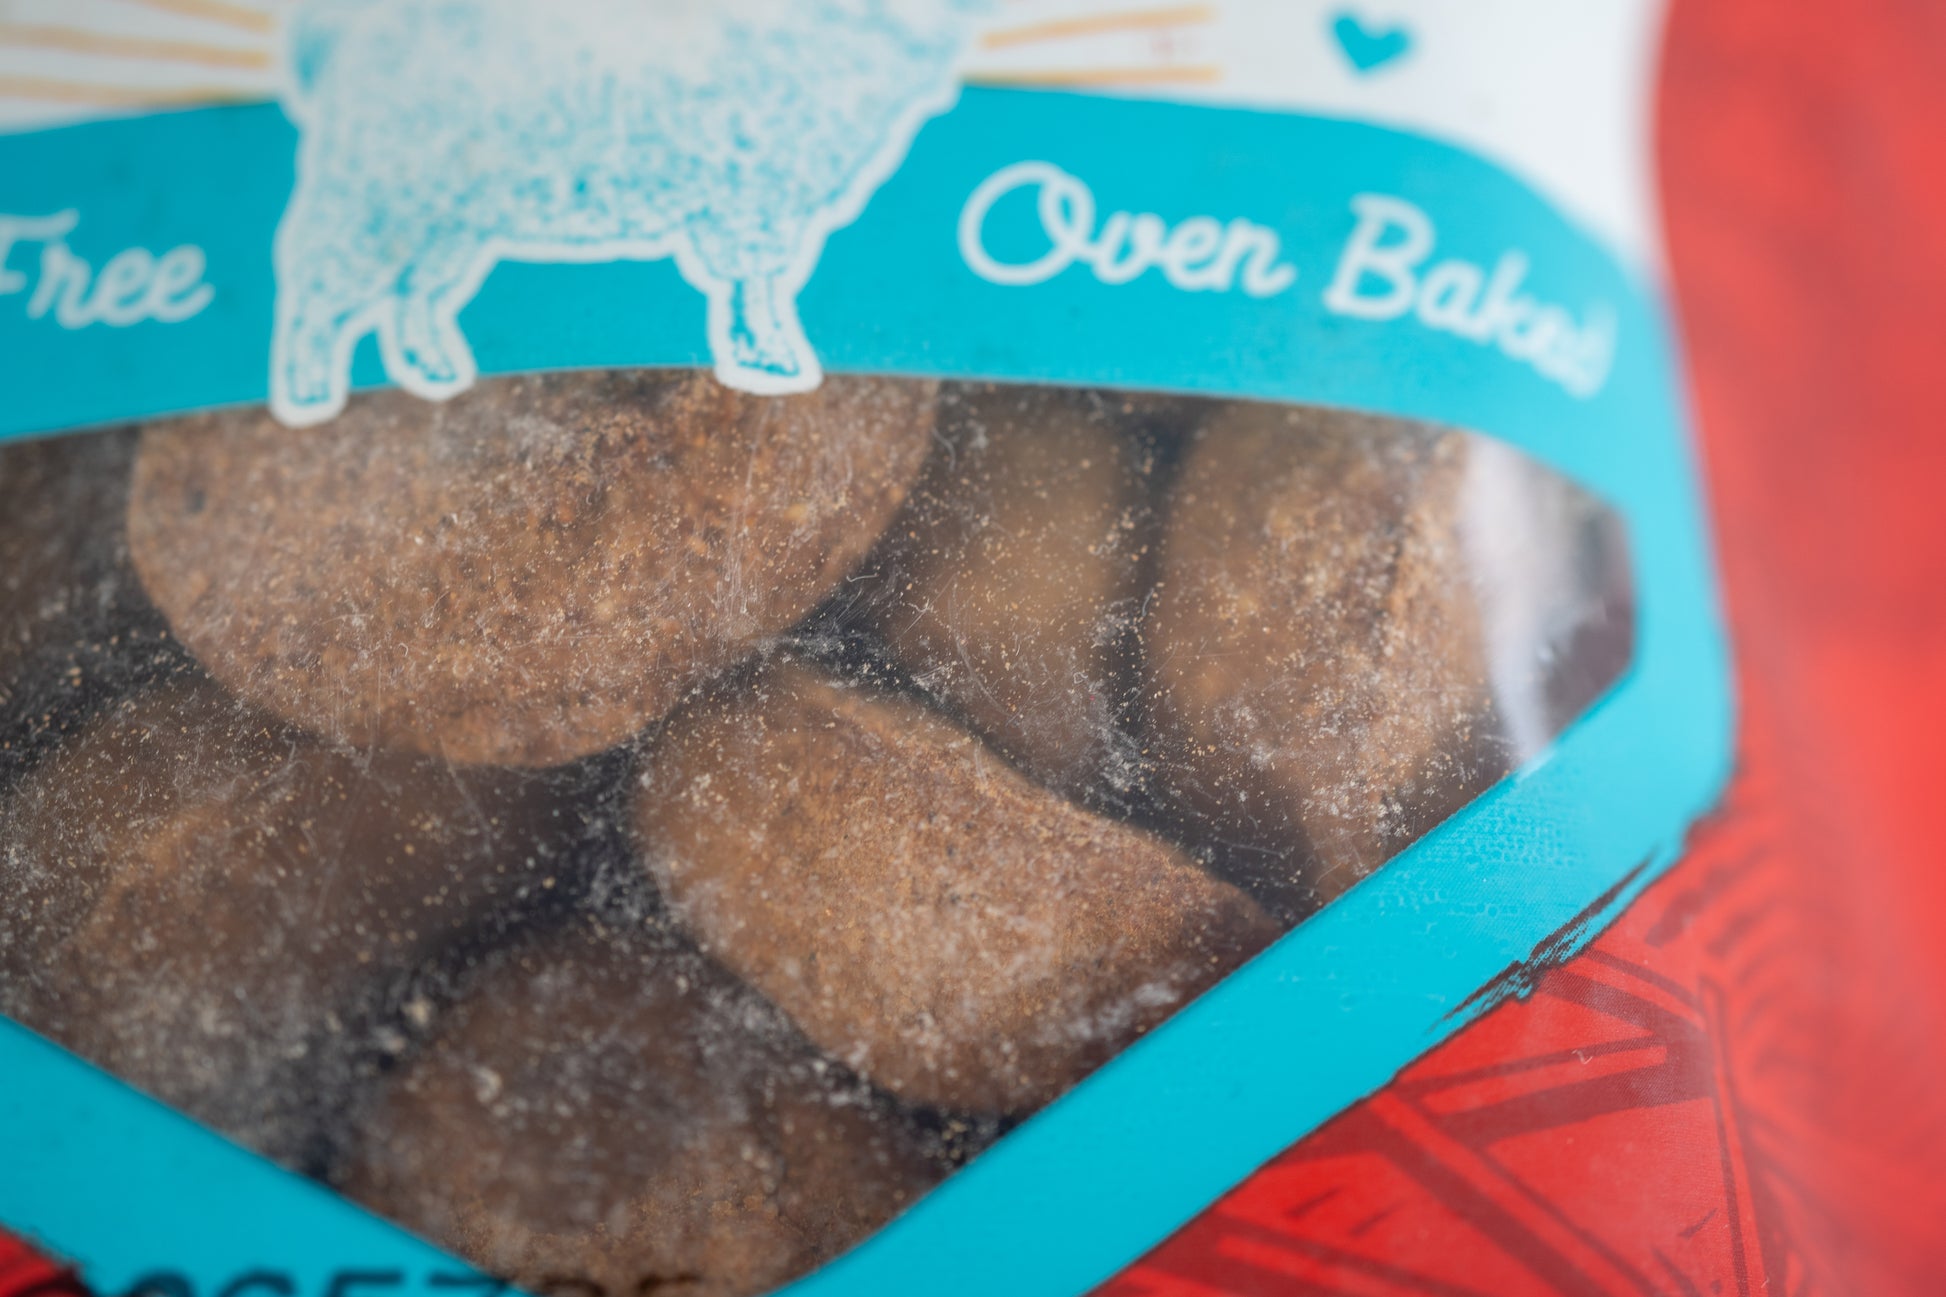 Close-up view of the raw coated dog biscuits. |Vue rapprochée des biscuits pour chiens enrobés d'agneau cru.